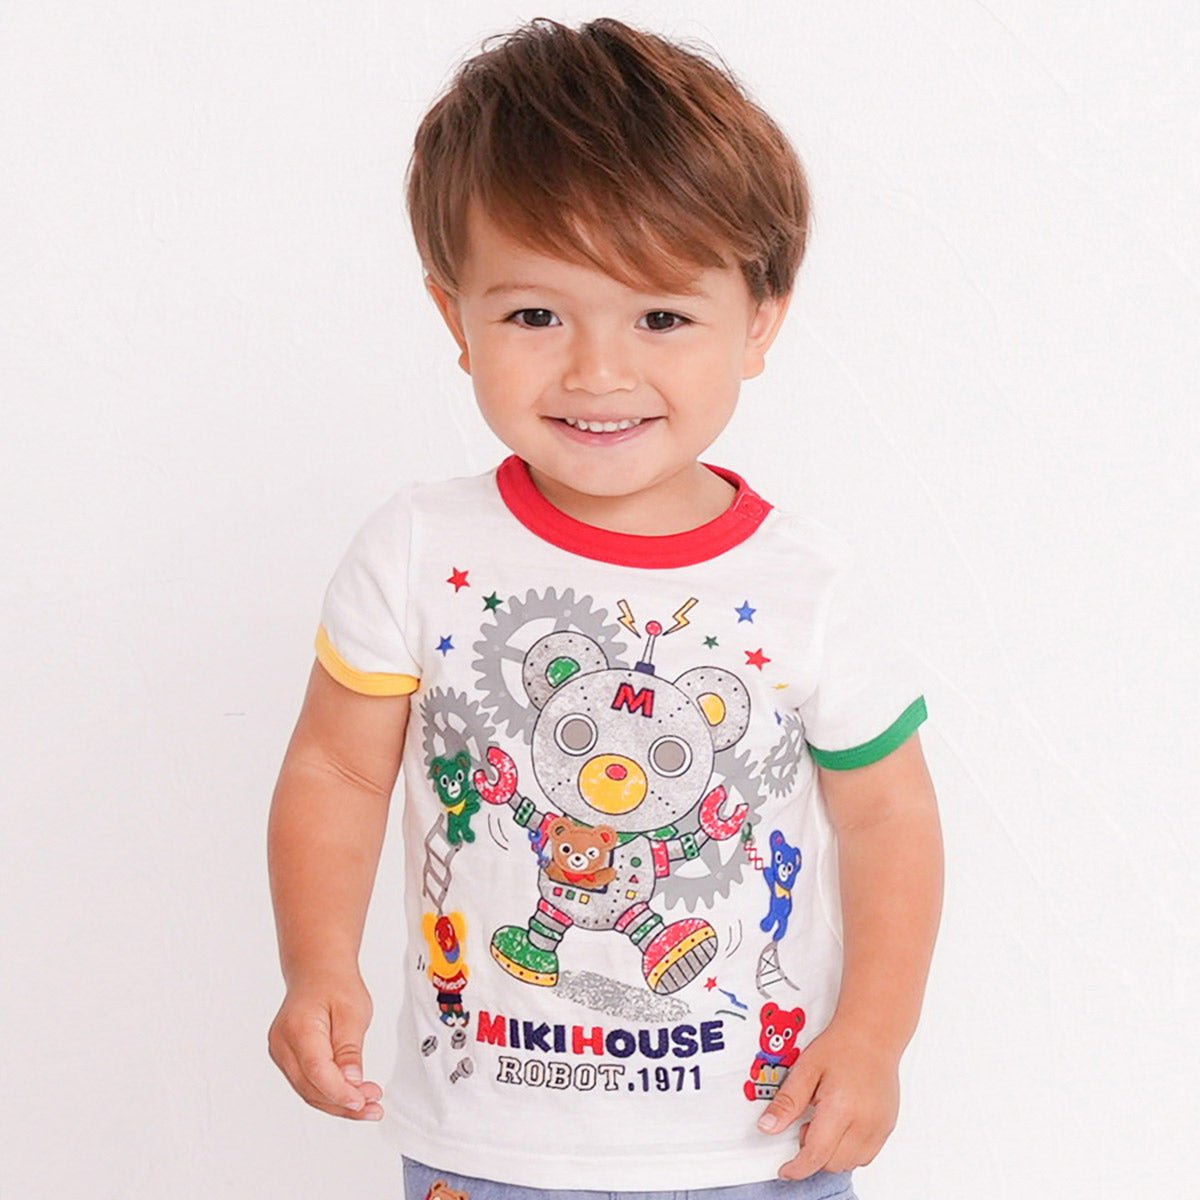 MIKI HOUSE Robot Factory T-Shirt - 12-5206-578-01-90